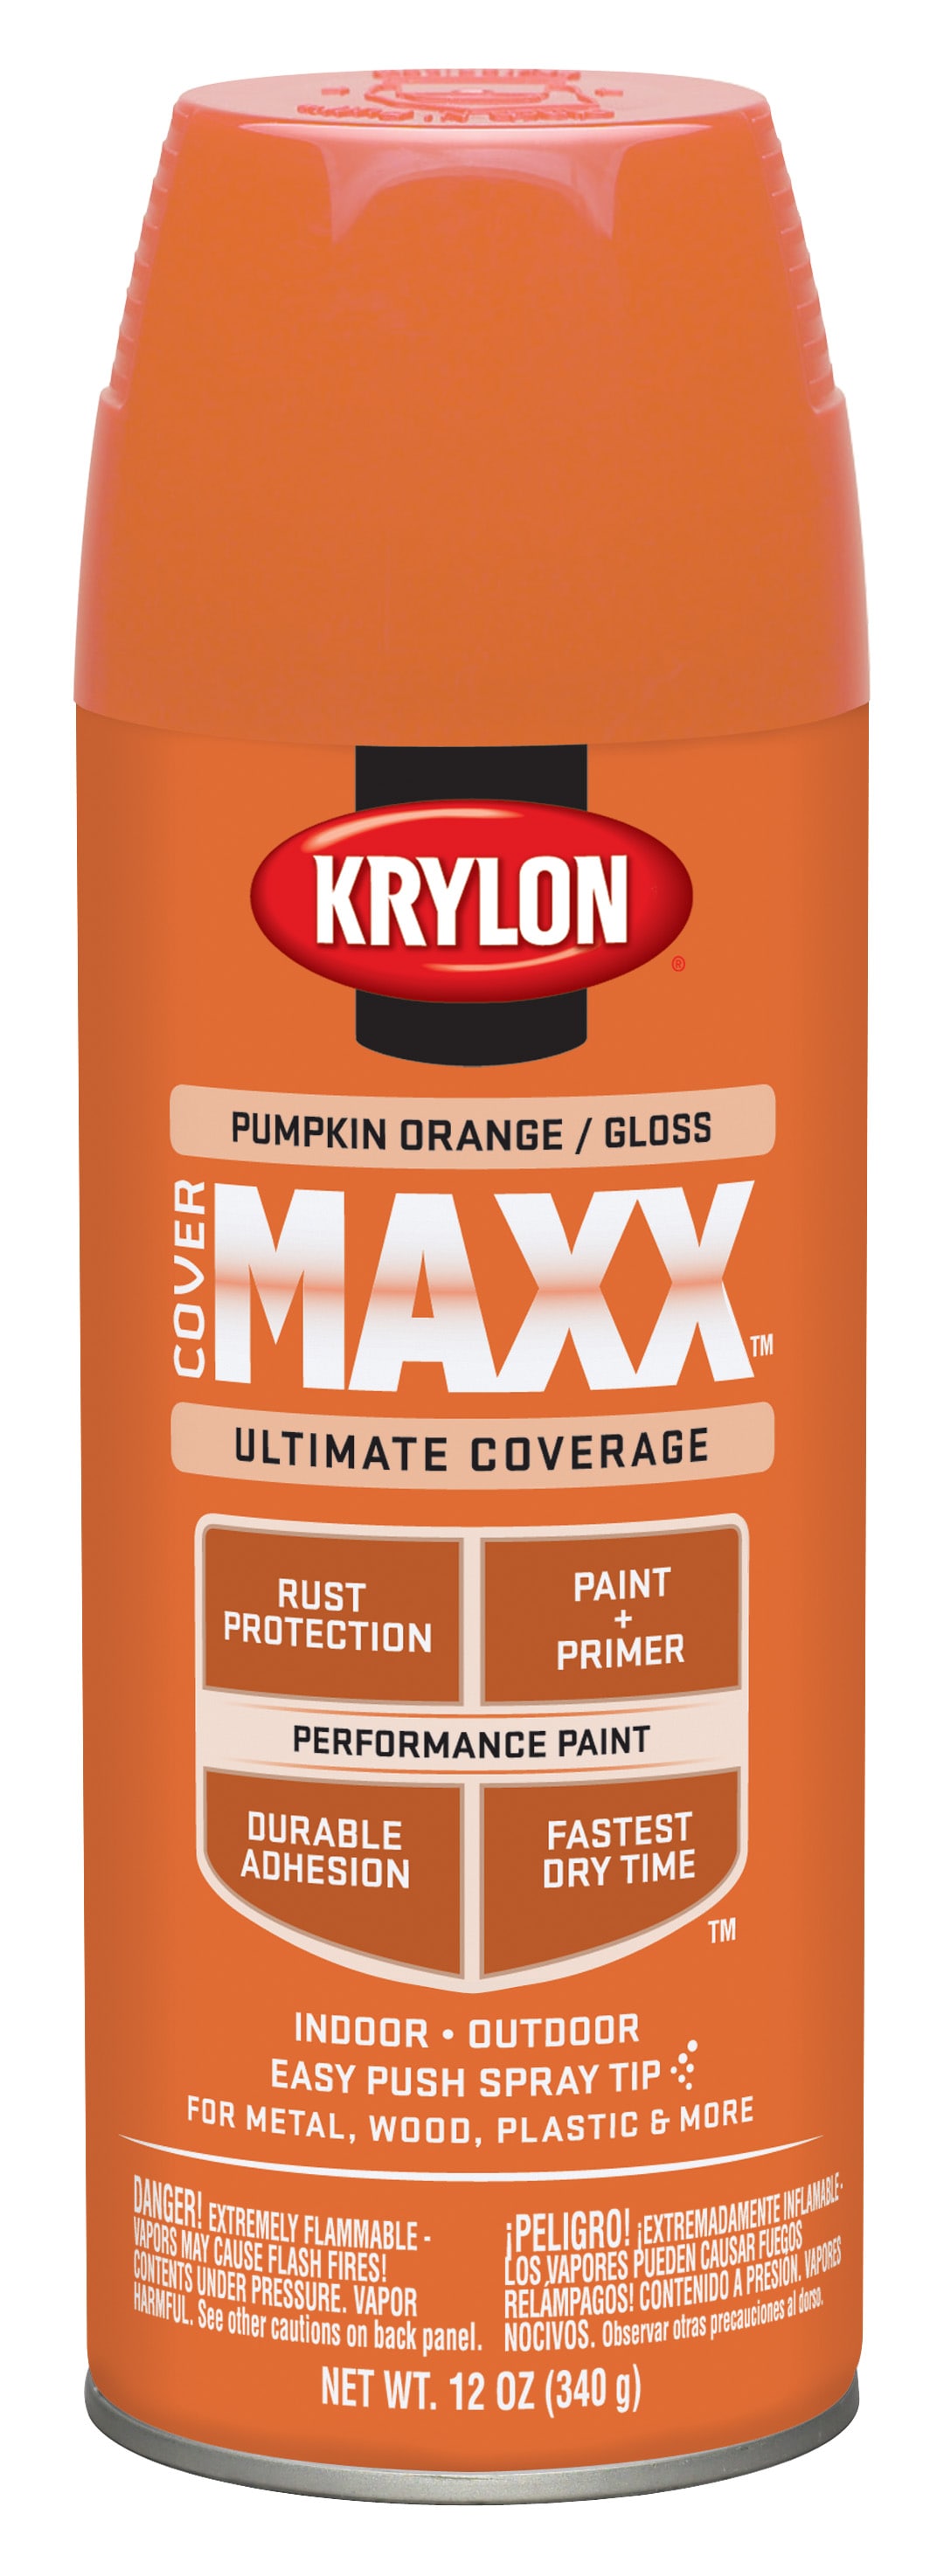 Rust-Oleum SuperMaxx Gloss Safety Red Spray Paint (NET WT. 15-oz